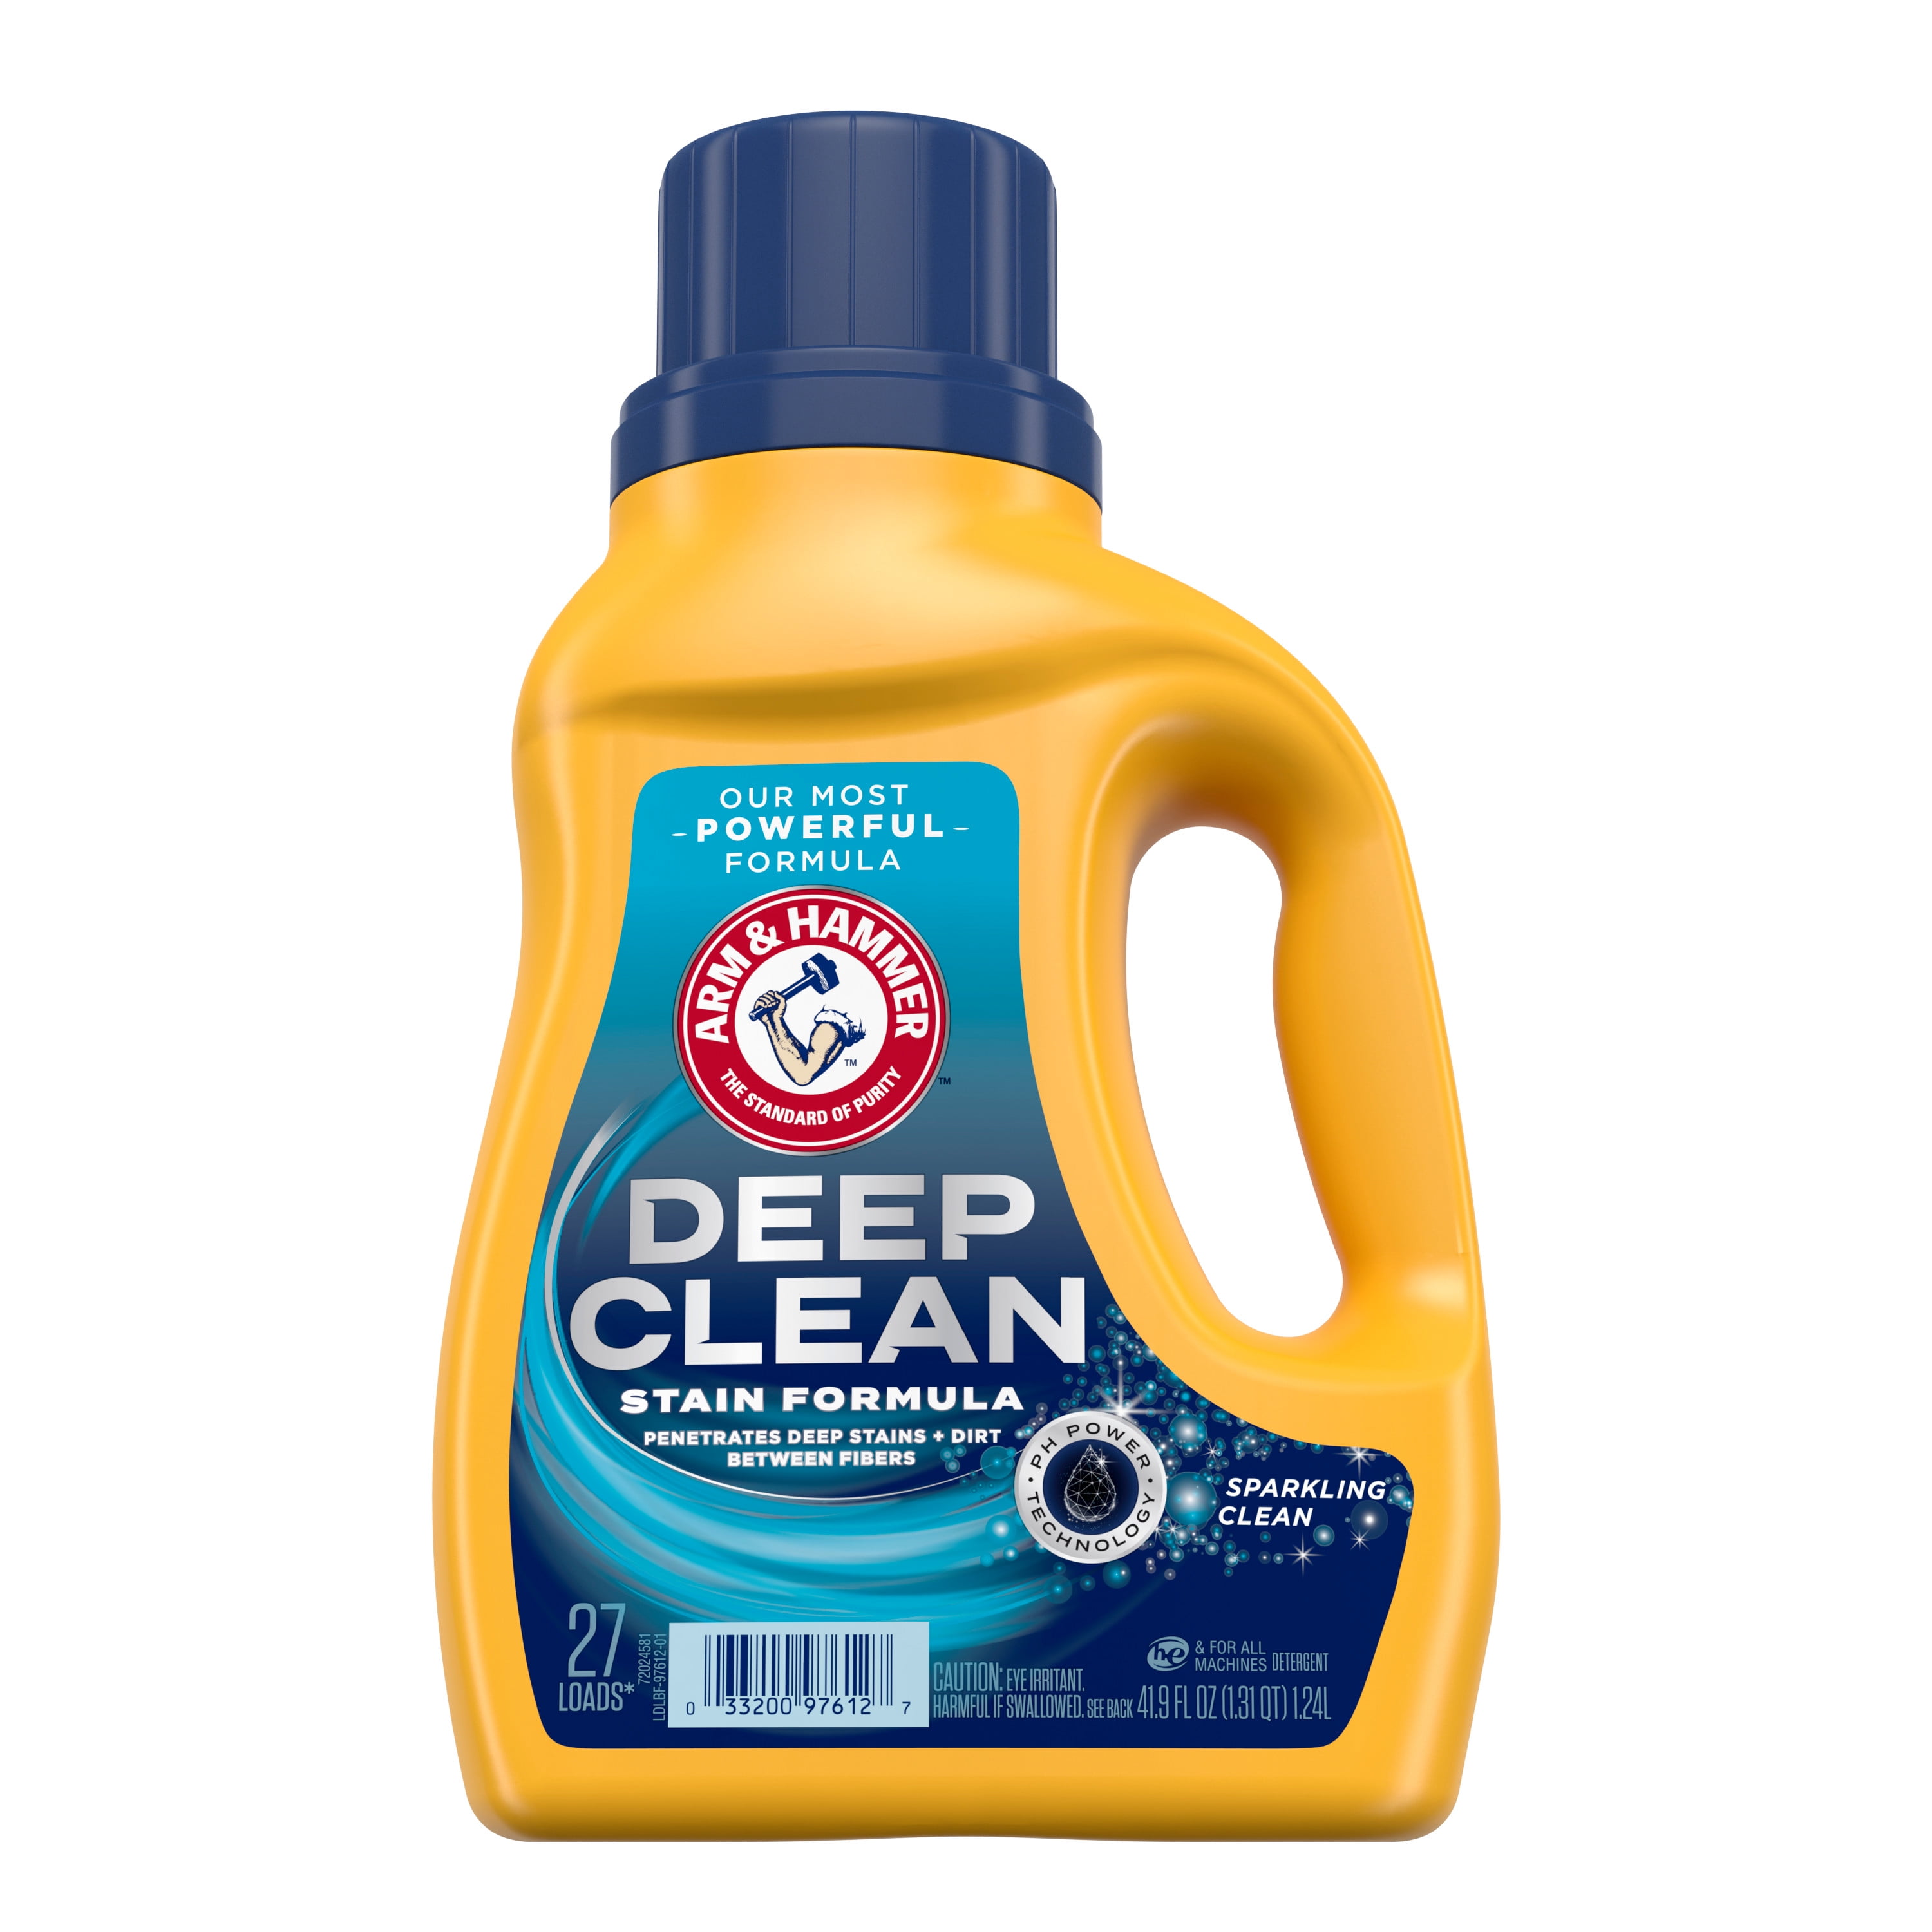 Arm & Hammer Deep Clean Stain, 27 Loads Liquid Laundry Detergent, 41.9 Fl oz